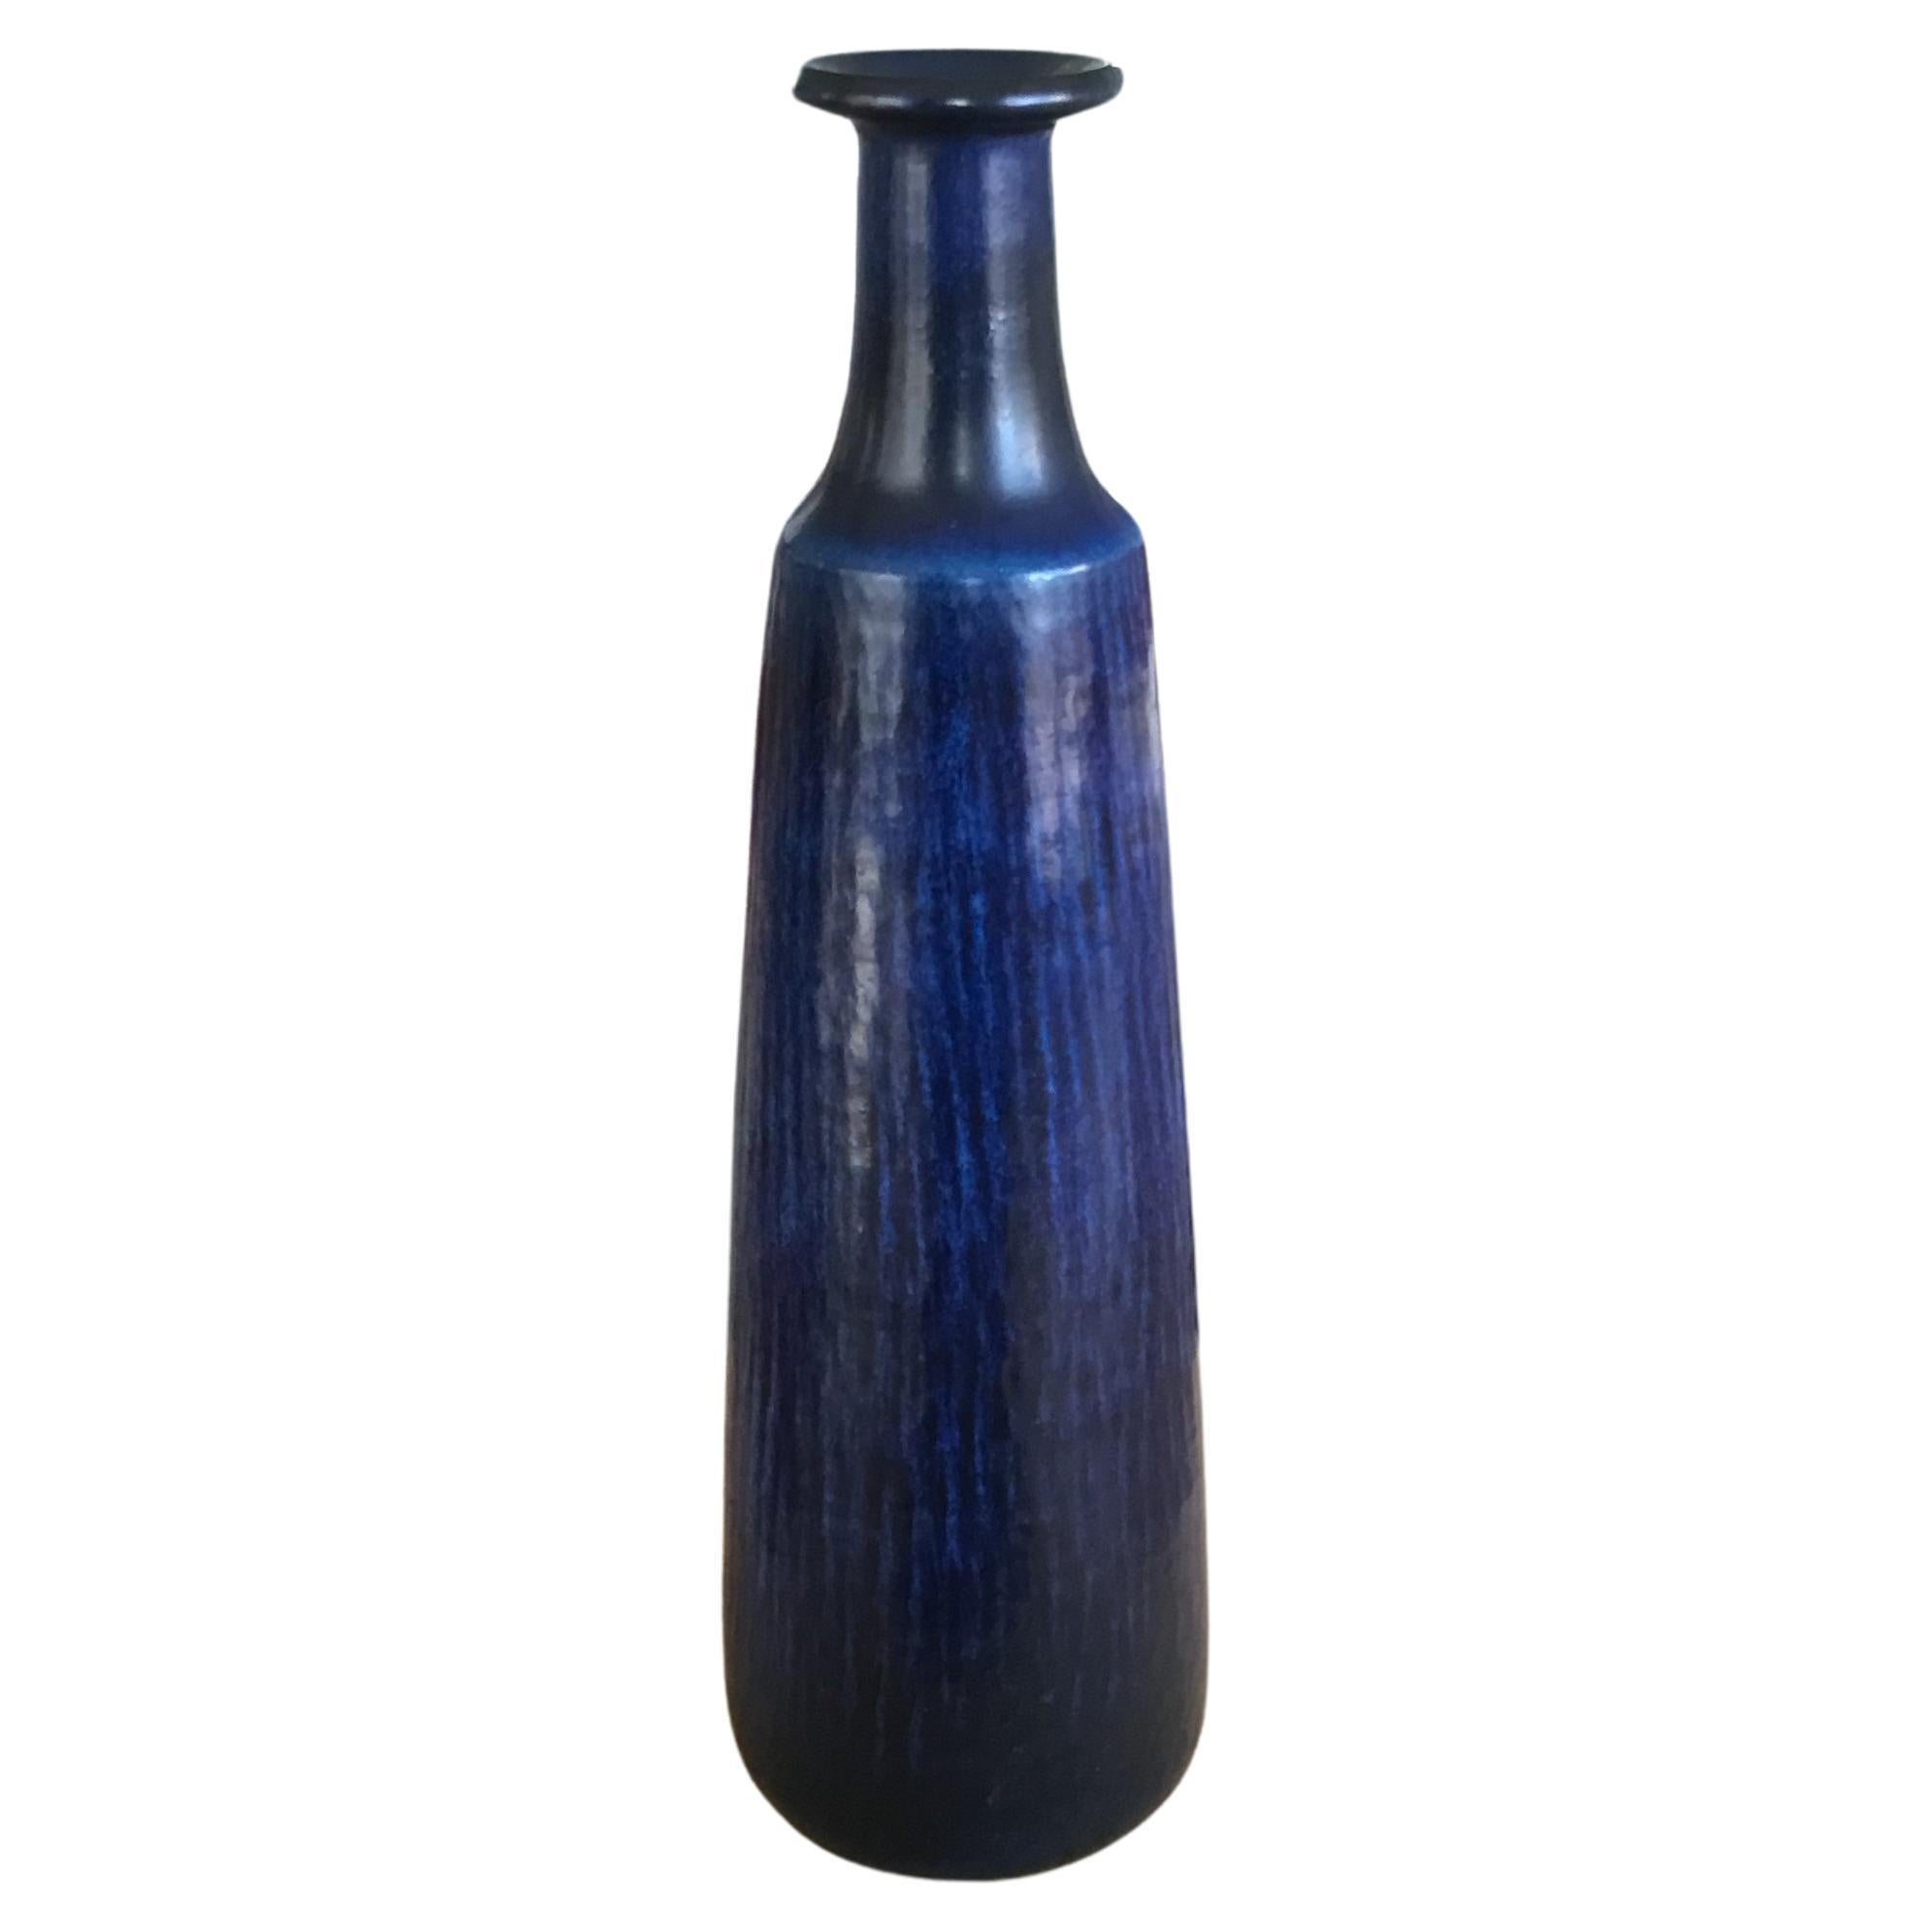 Very Tall Gunnar Nylund Vase by Nymølle with Dark Blue Glaze 1960s